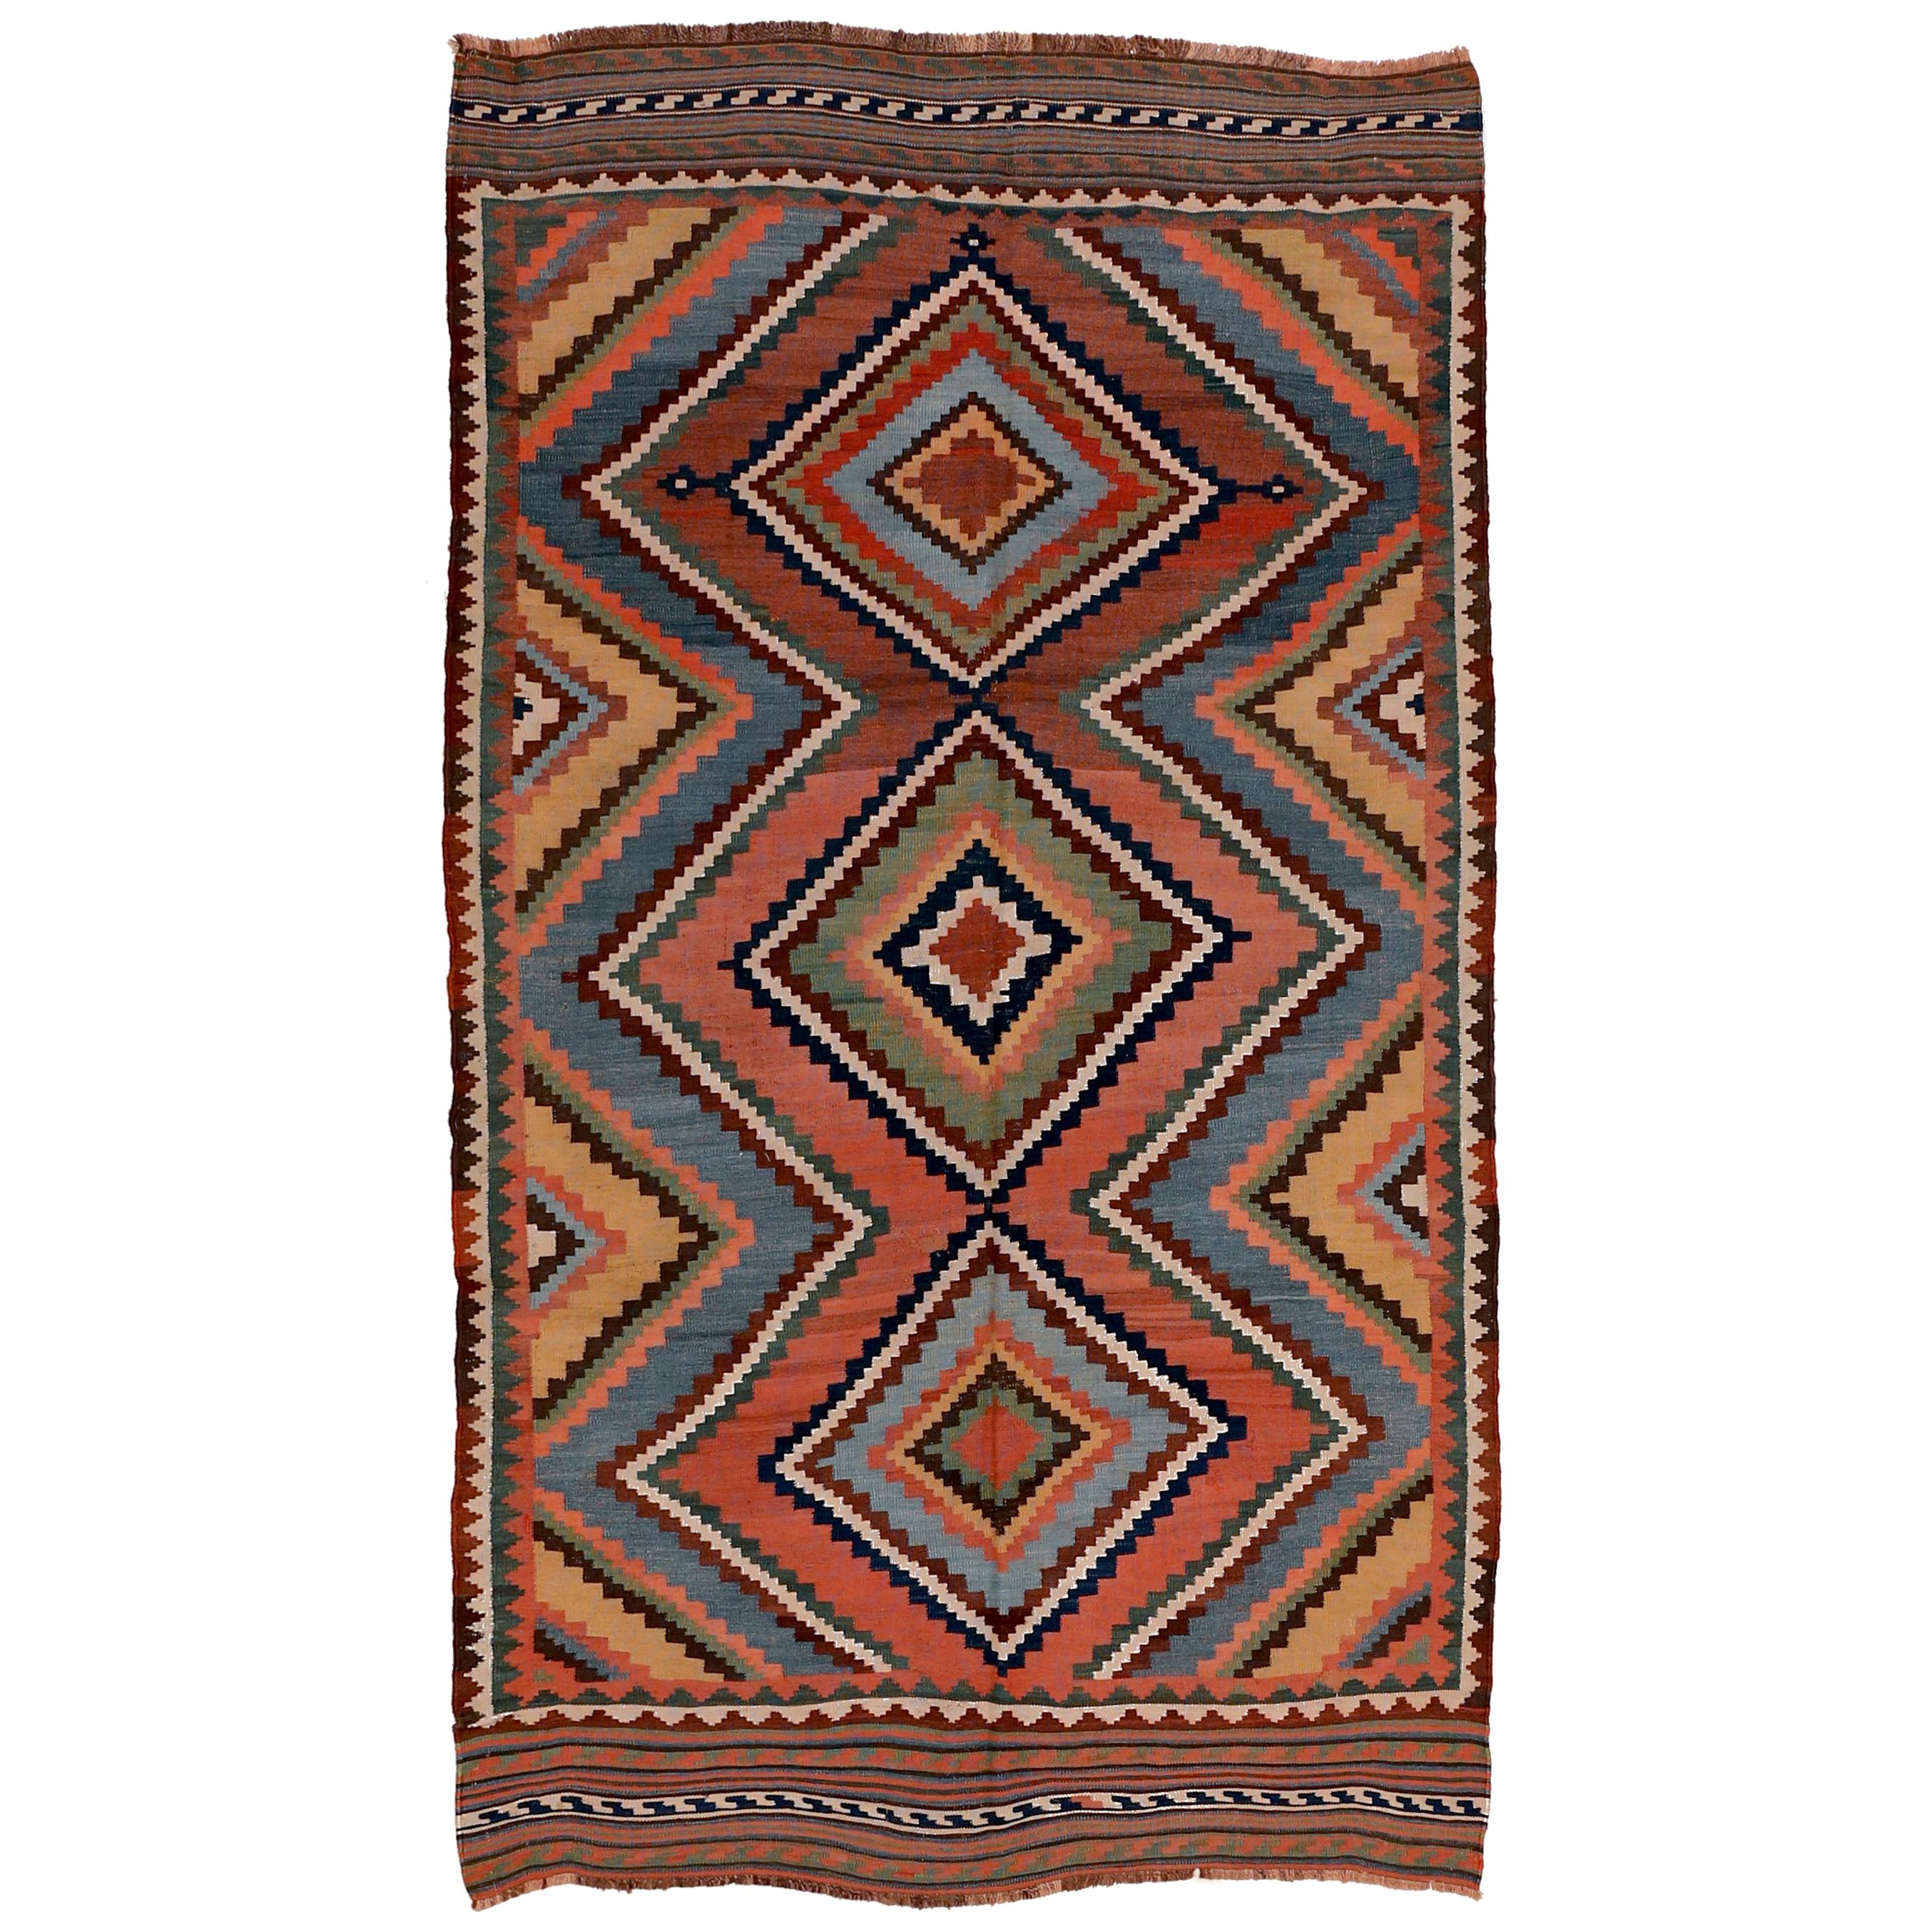 Antique Tribal Geometric Design Kilim Rug